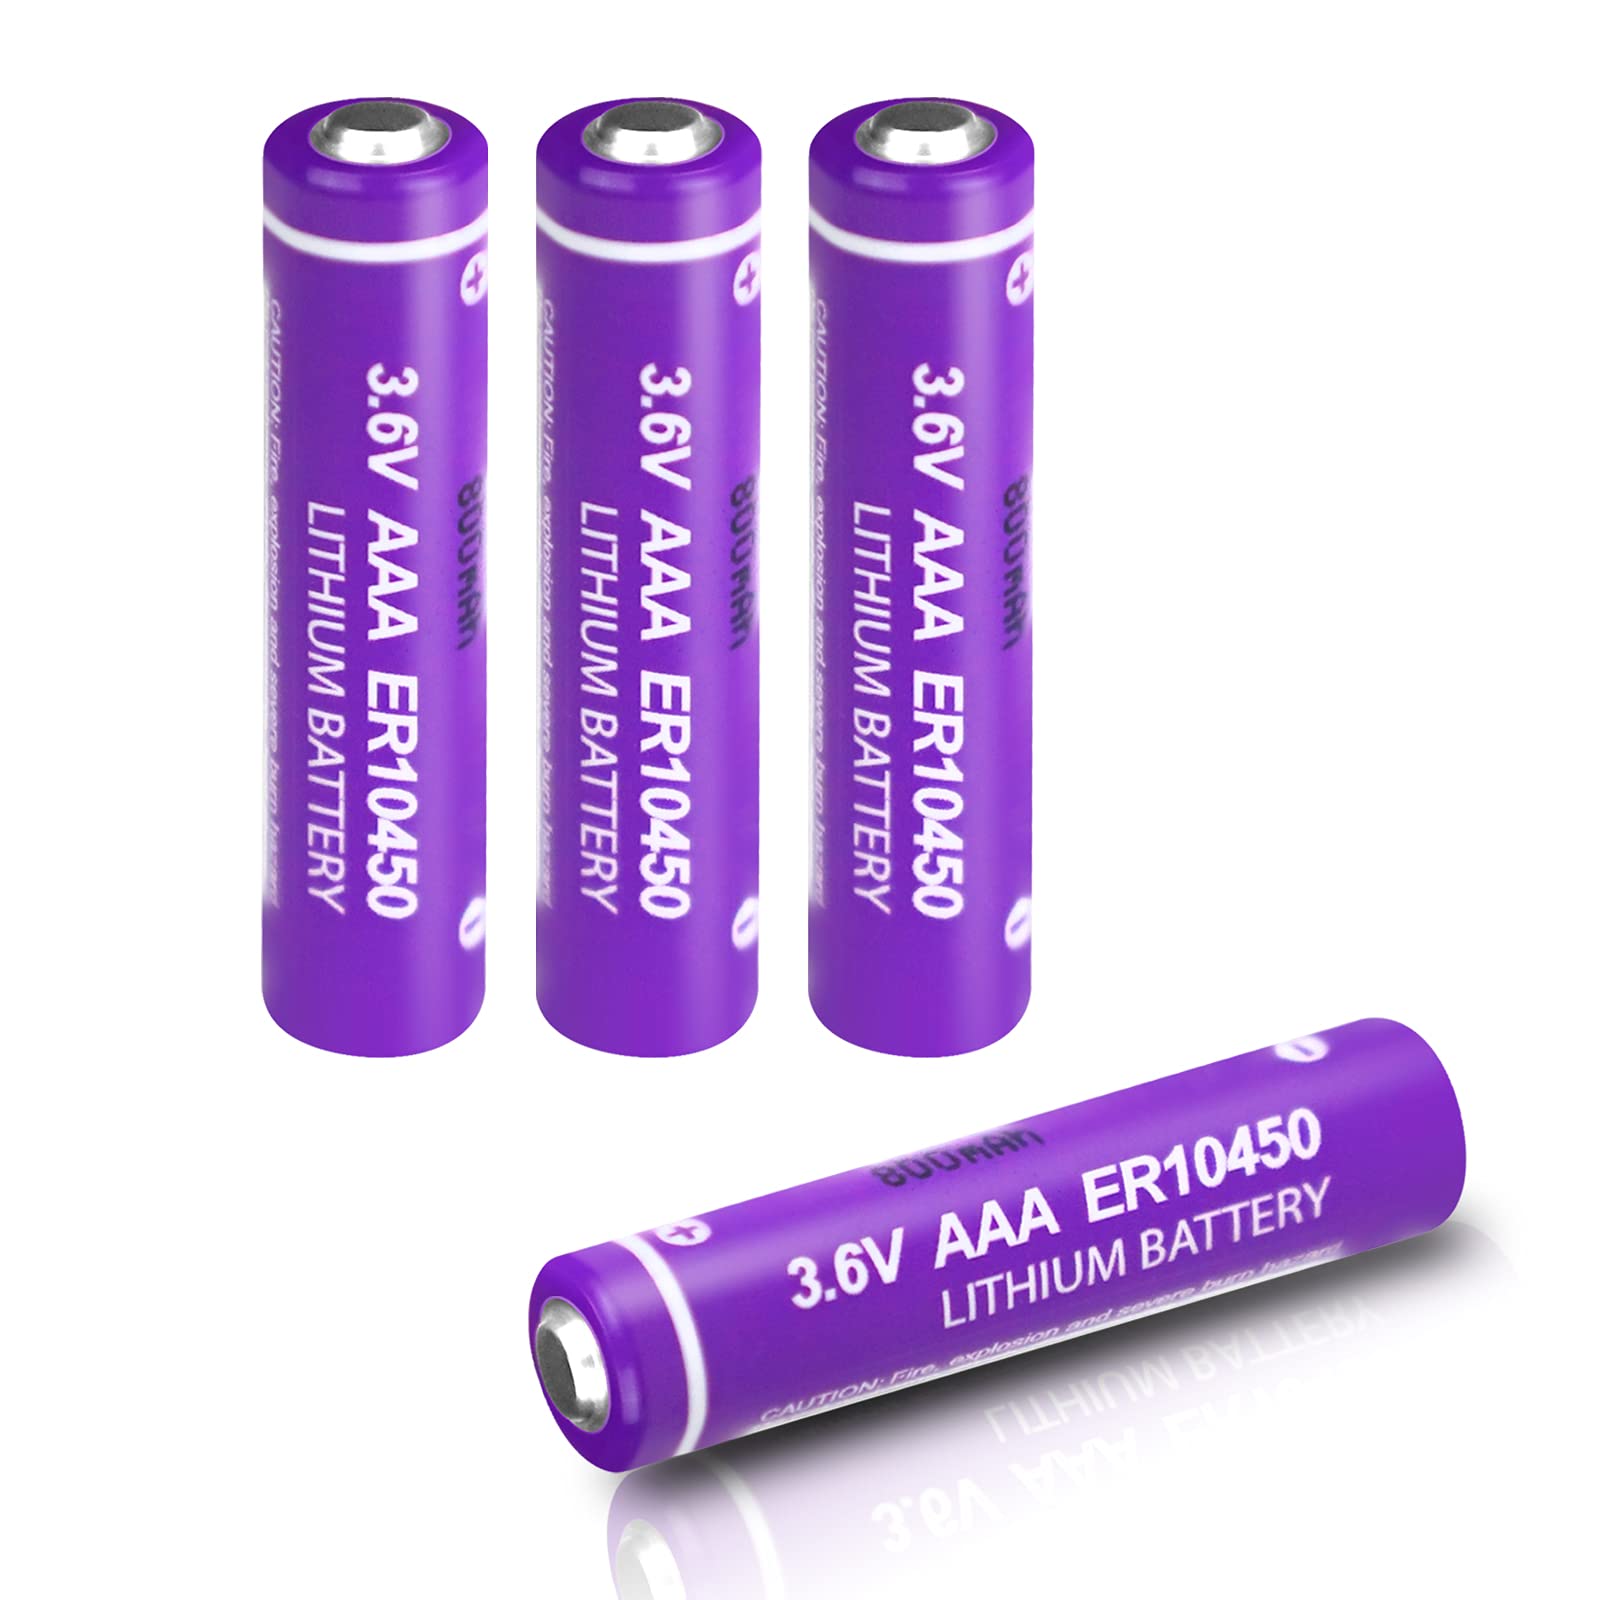 Battery AAA Lithium Battery 3.6V 800mAh